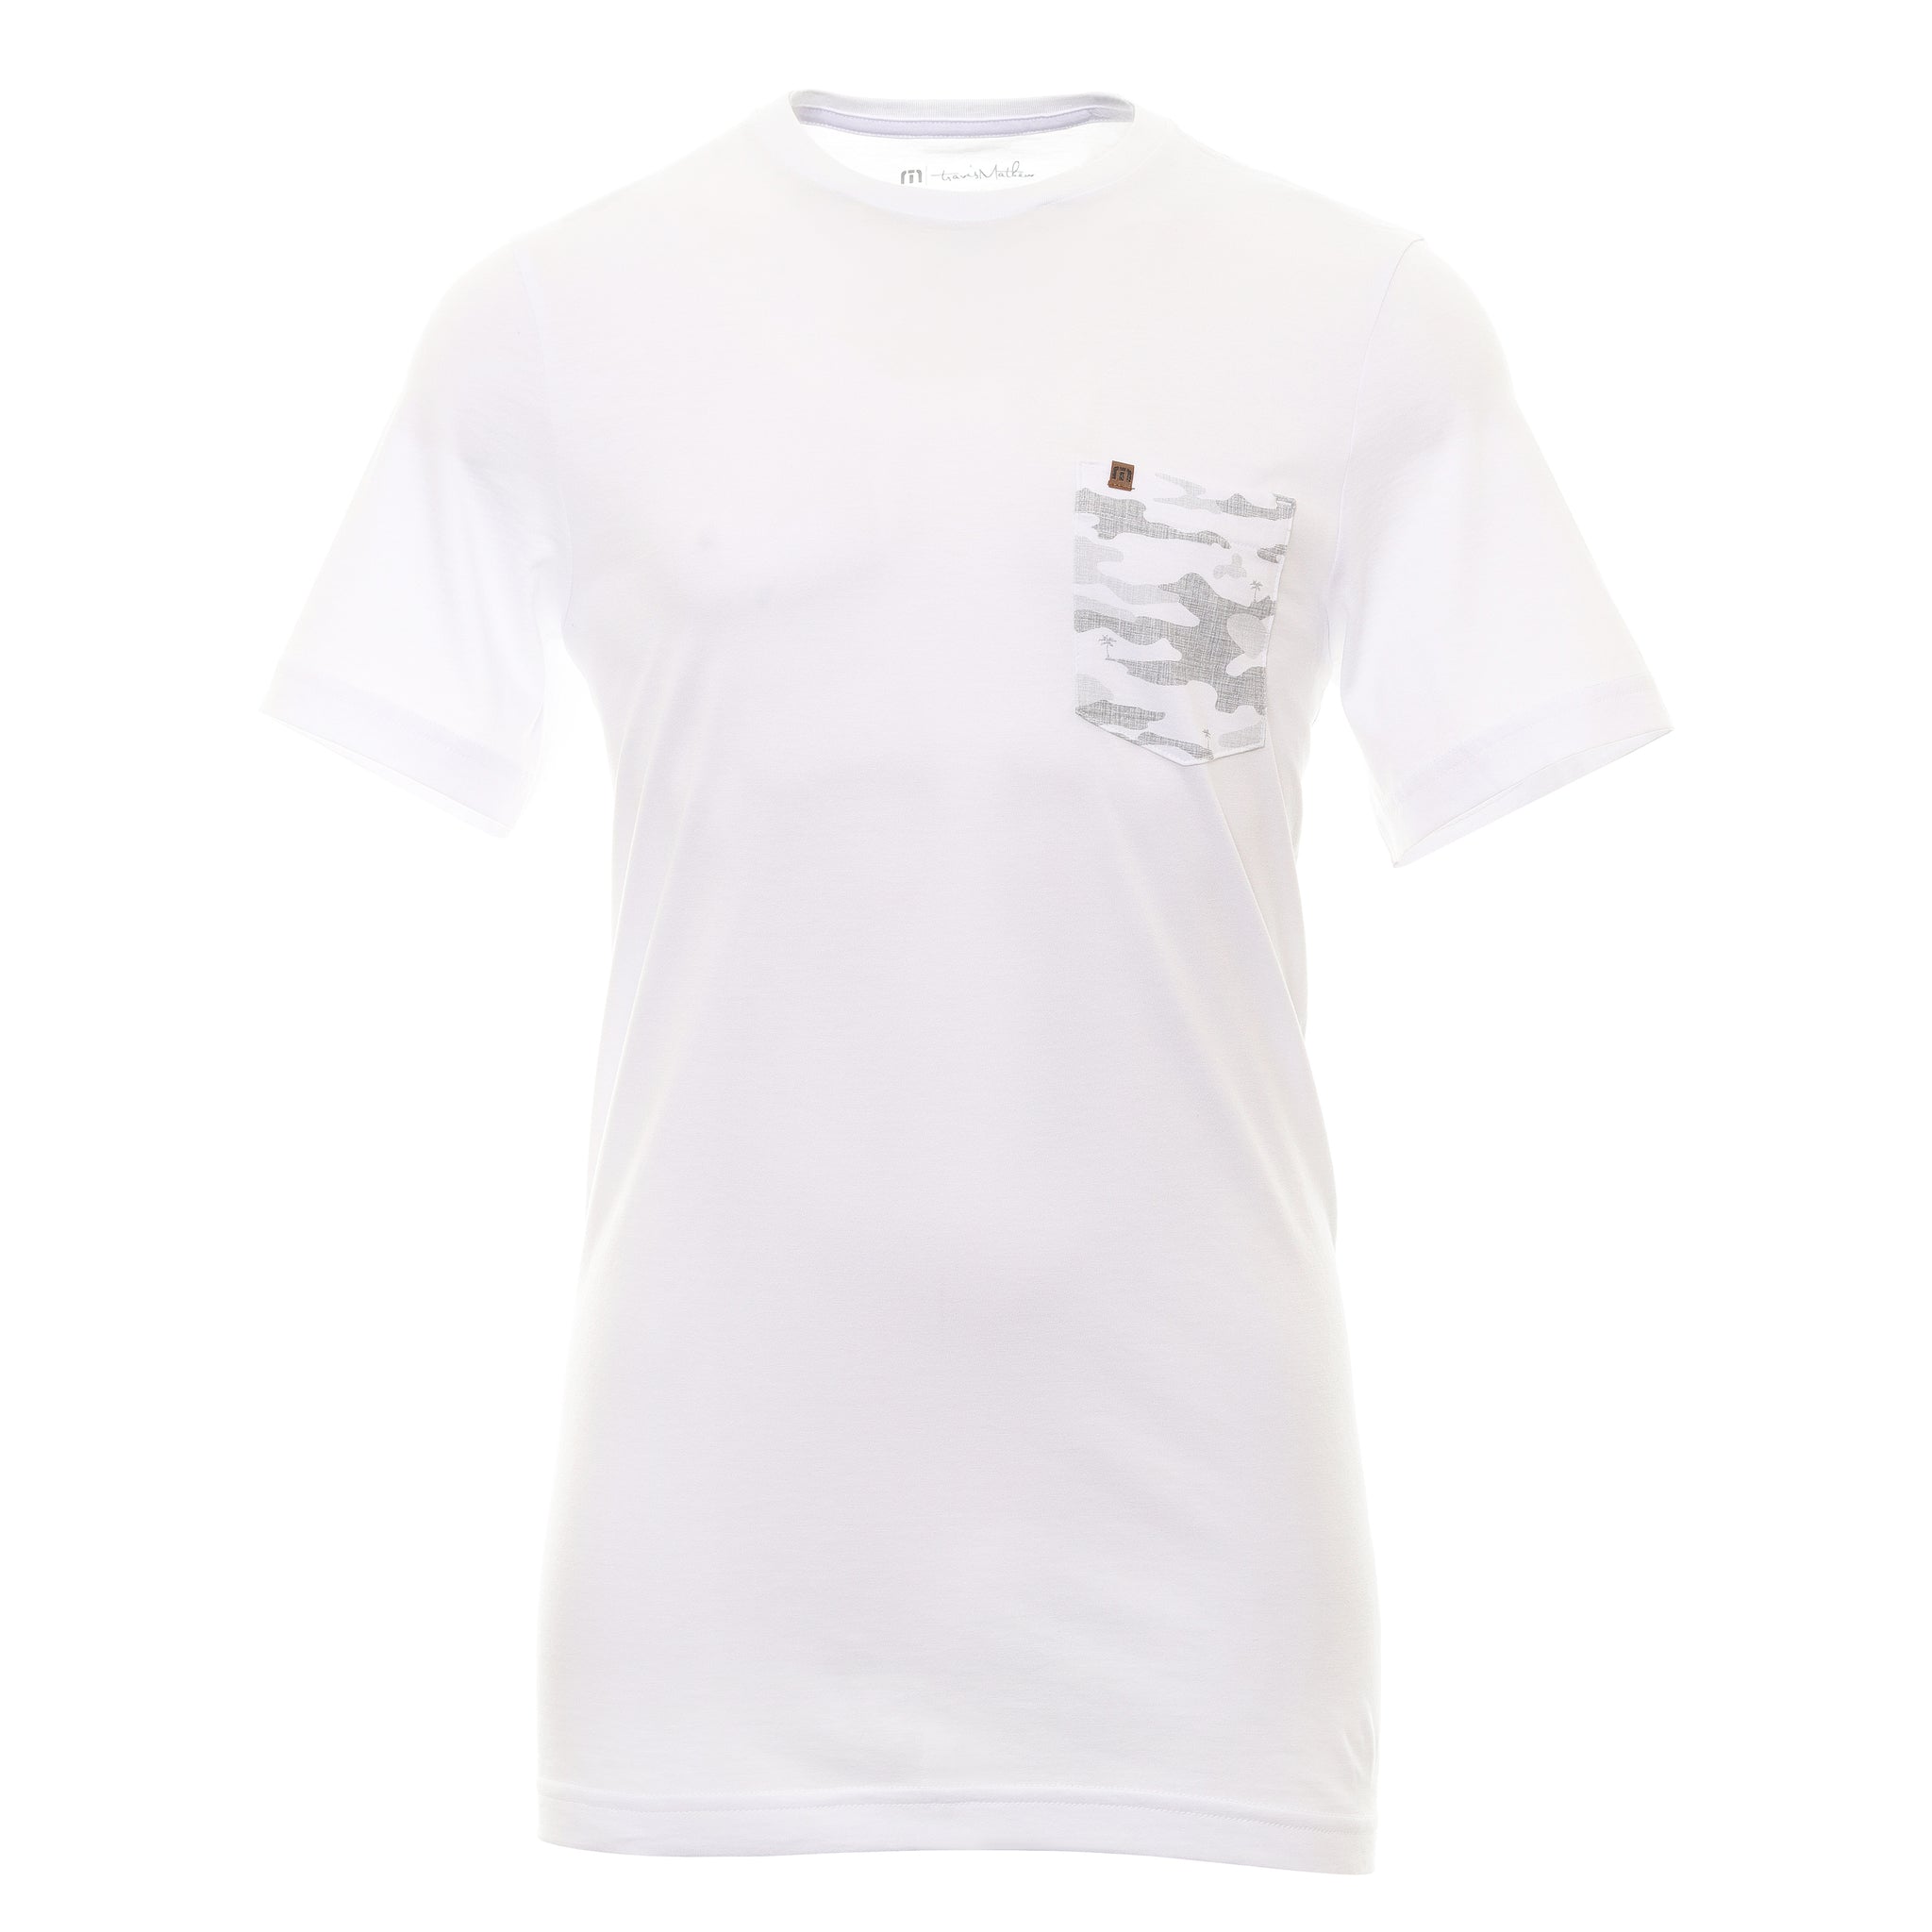 travismathew-thirteen-below-2-0-tee-shirt-1my288-white